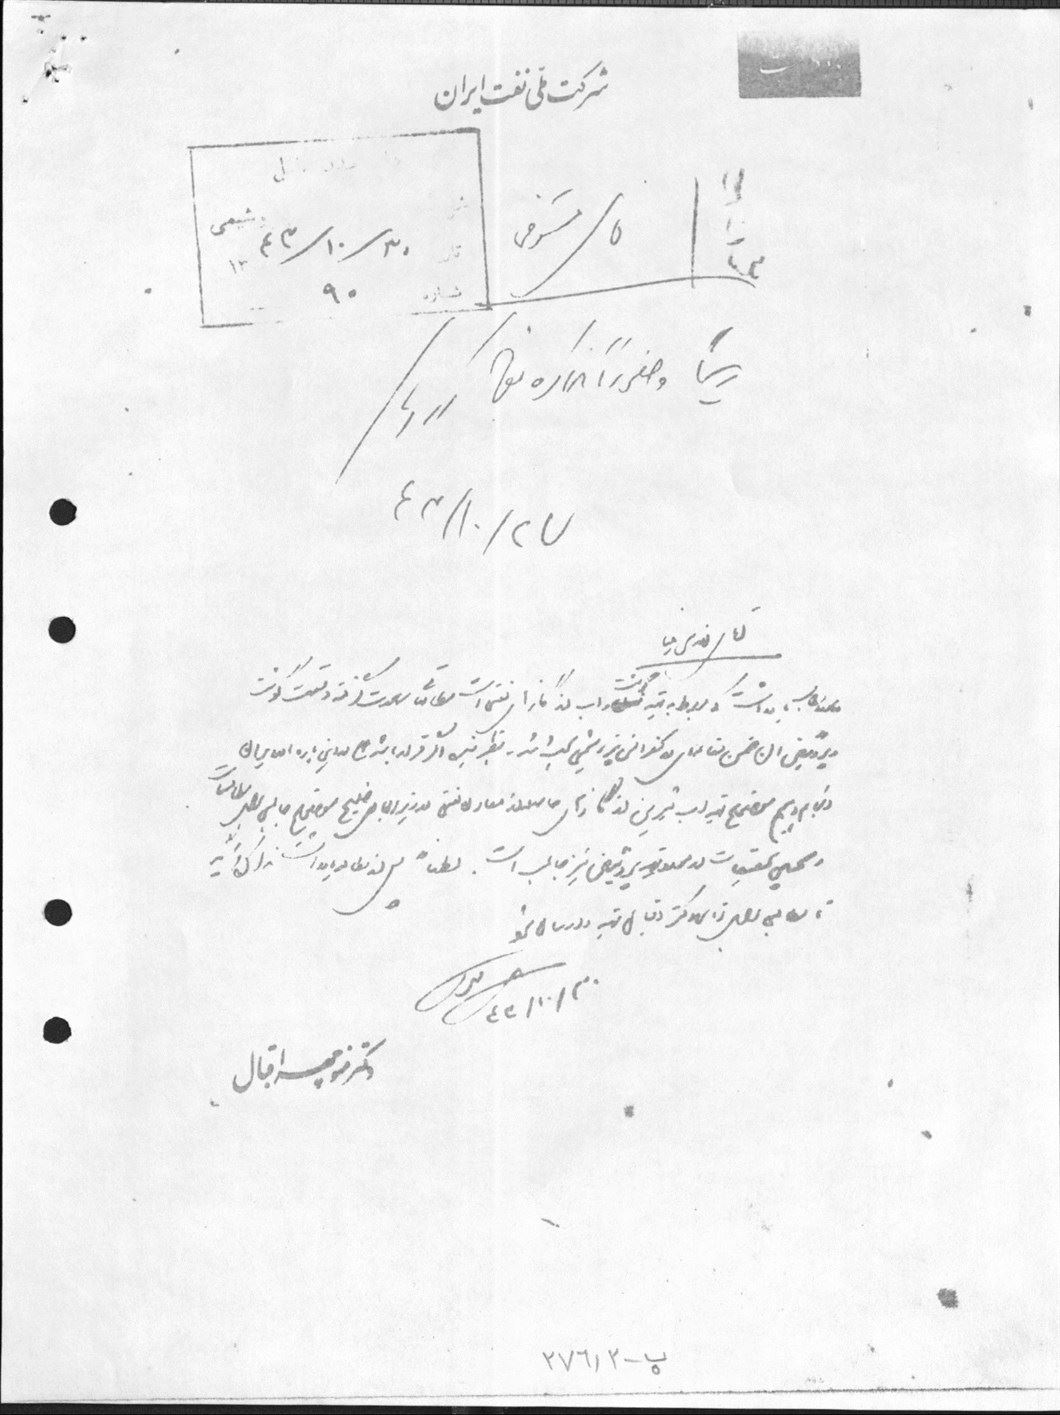  National Petrochemical Company (NPC) Historical Documents (Document No. 2)